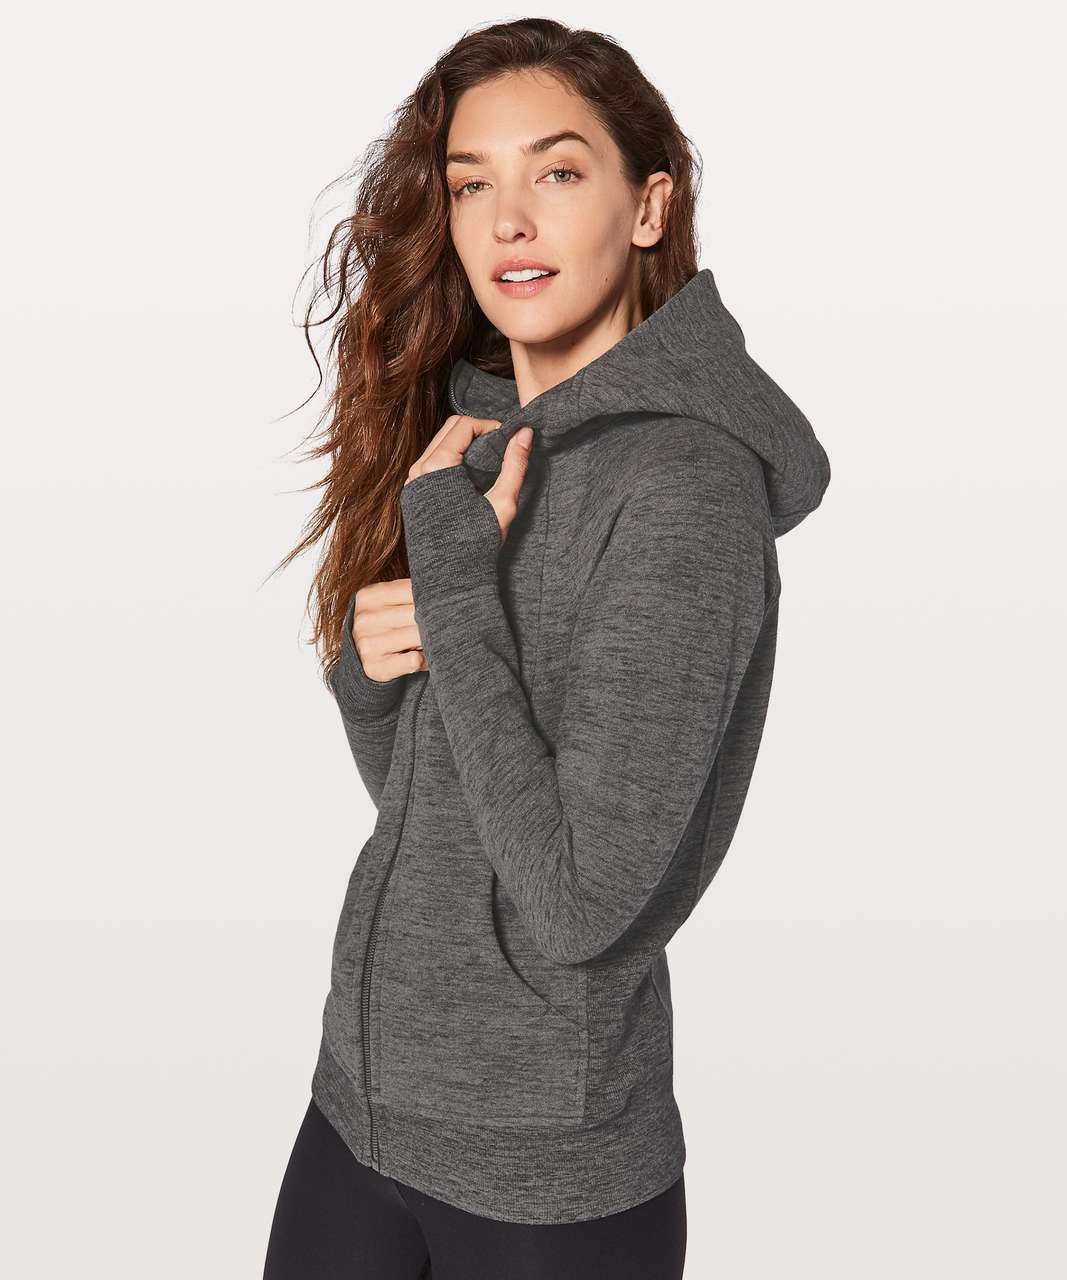 lululemon grey scuba hoodie, OFF 70%,Buy!